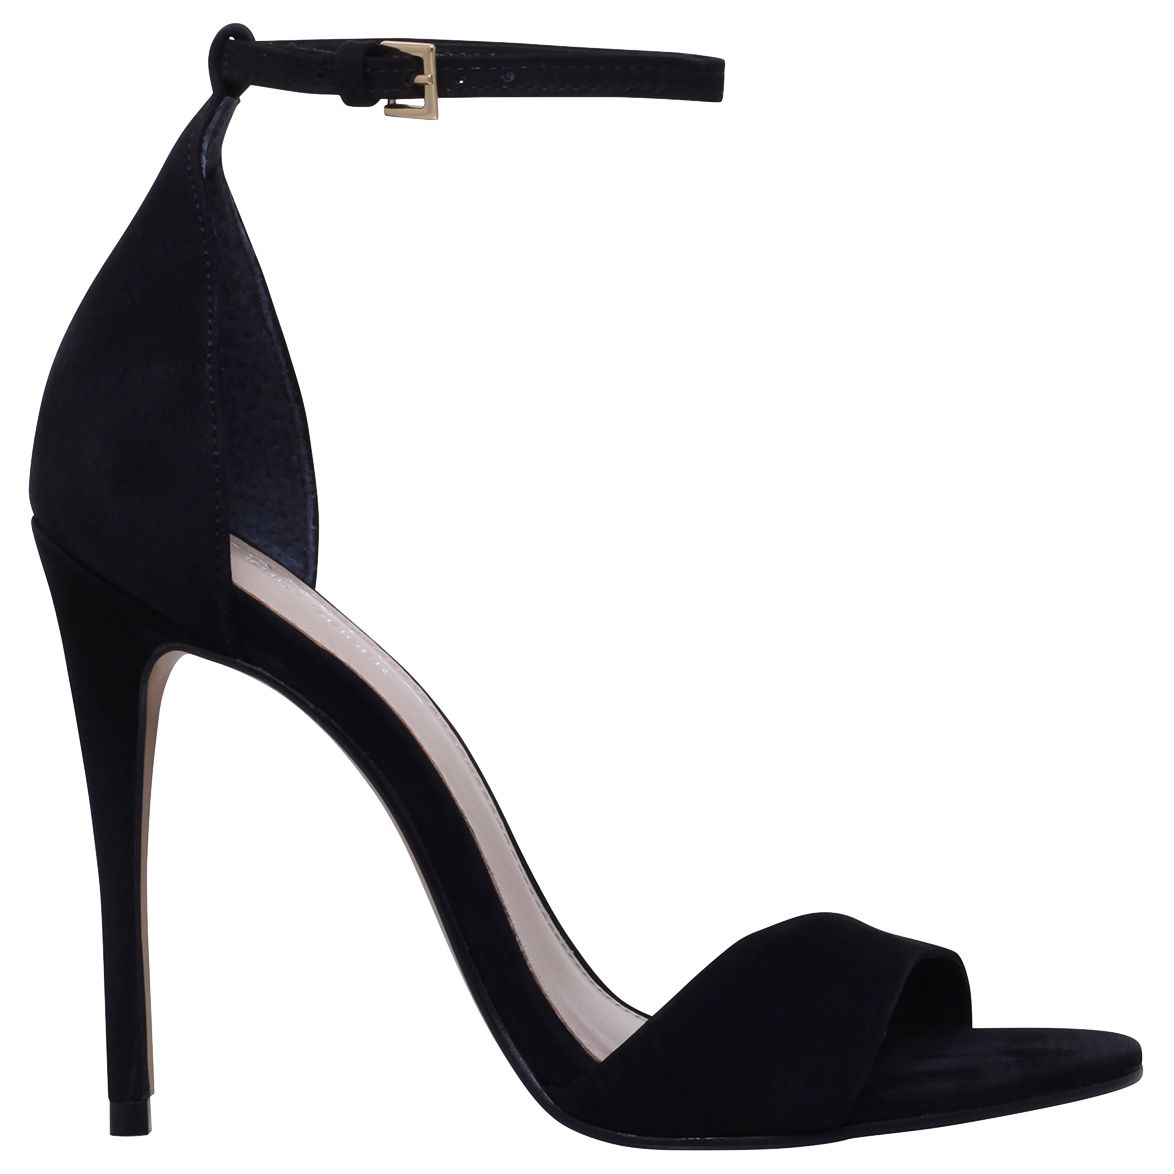 Carvela Glimmer High Heel Sandals, Black Nubuck, 8